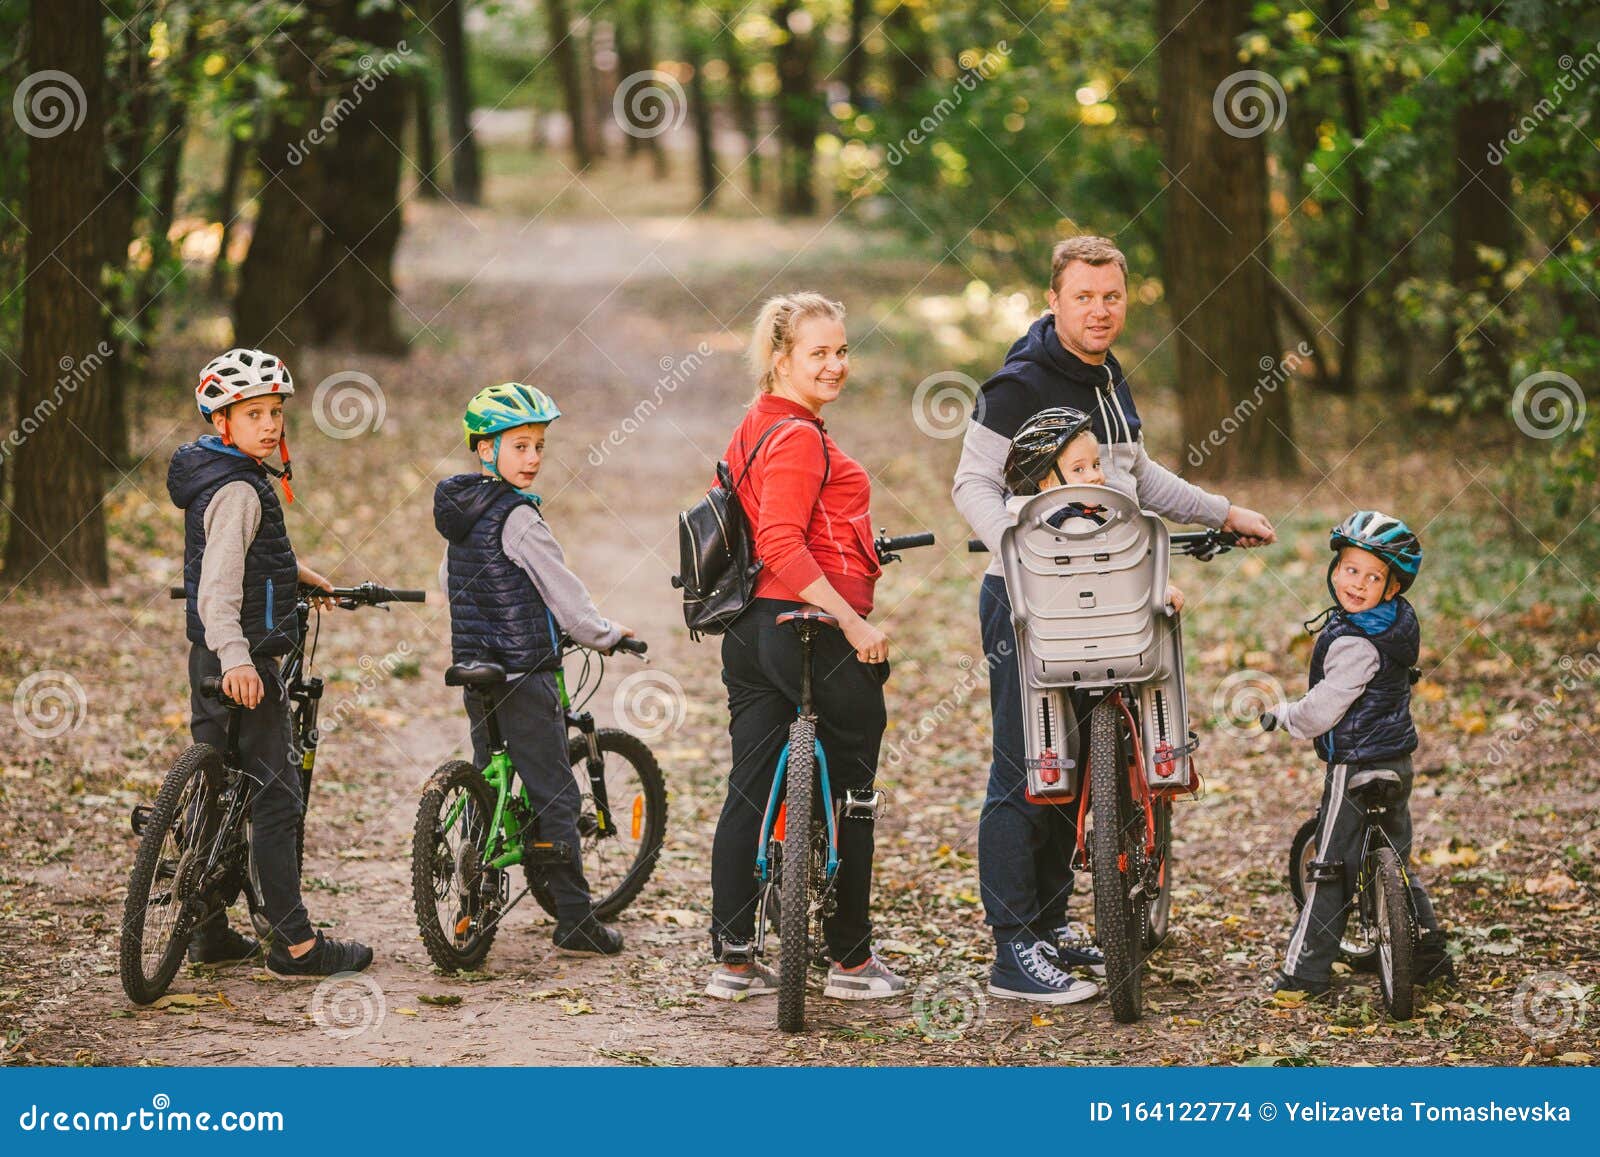 kids mountain biking